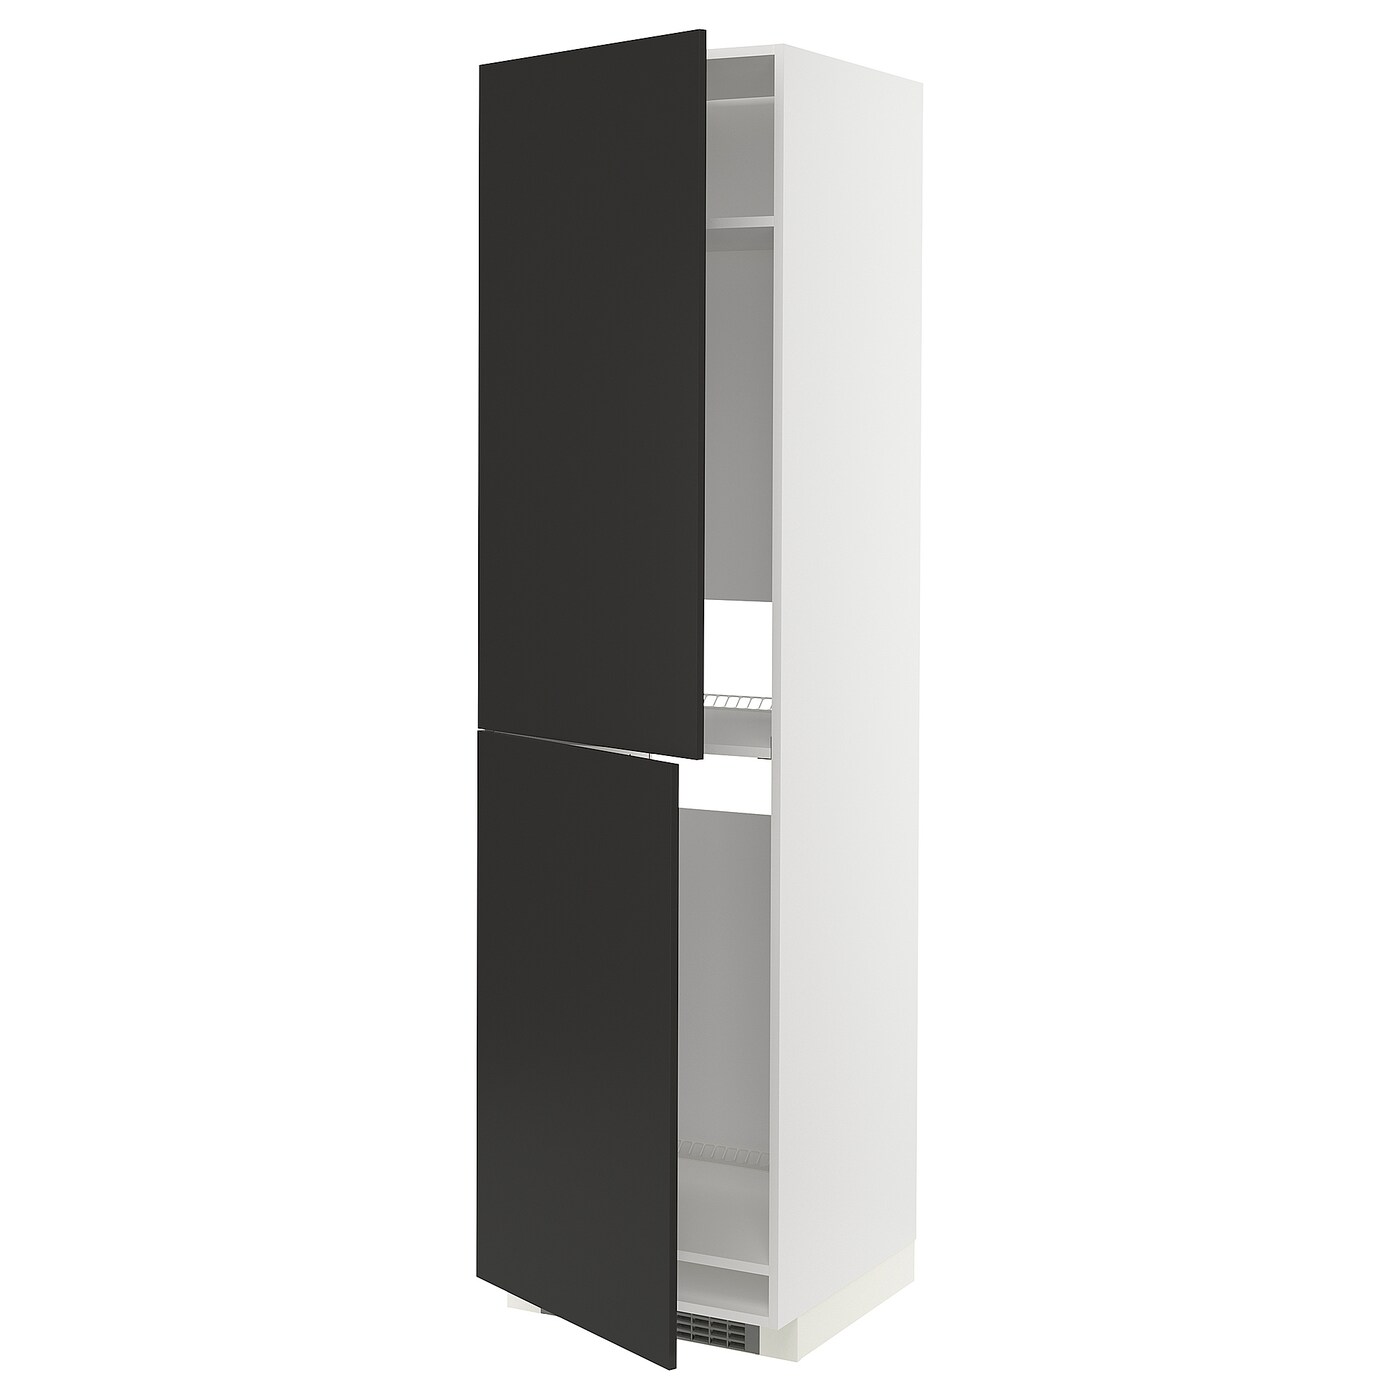 Высокий кухонный шкаф - IKEA METOD/МЕТОД ИКЕА, 220х60х60 см, белый/черный